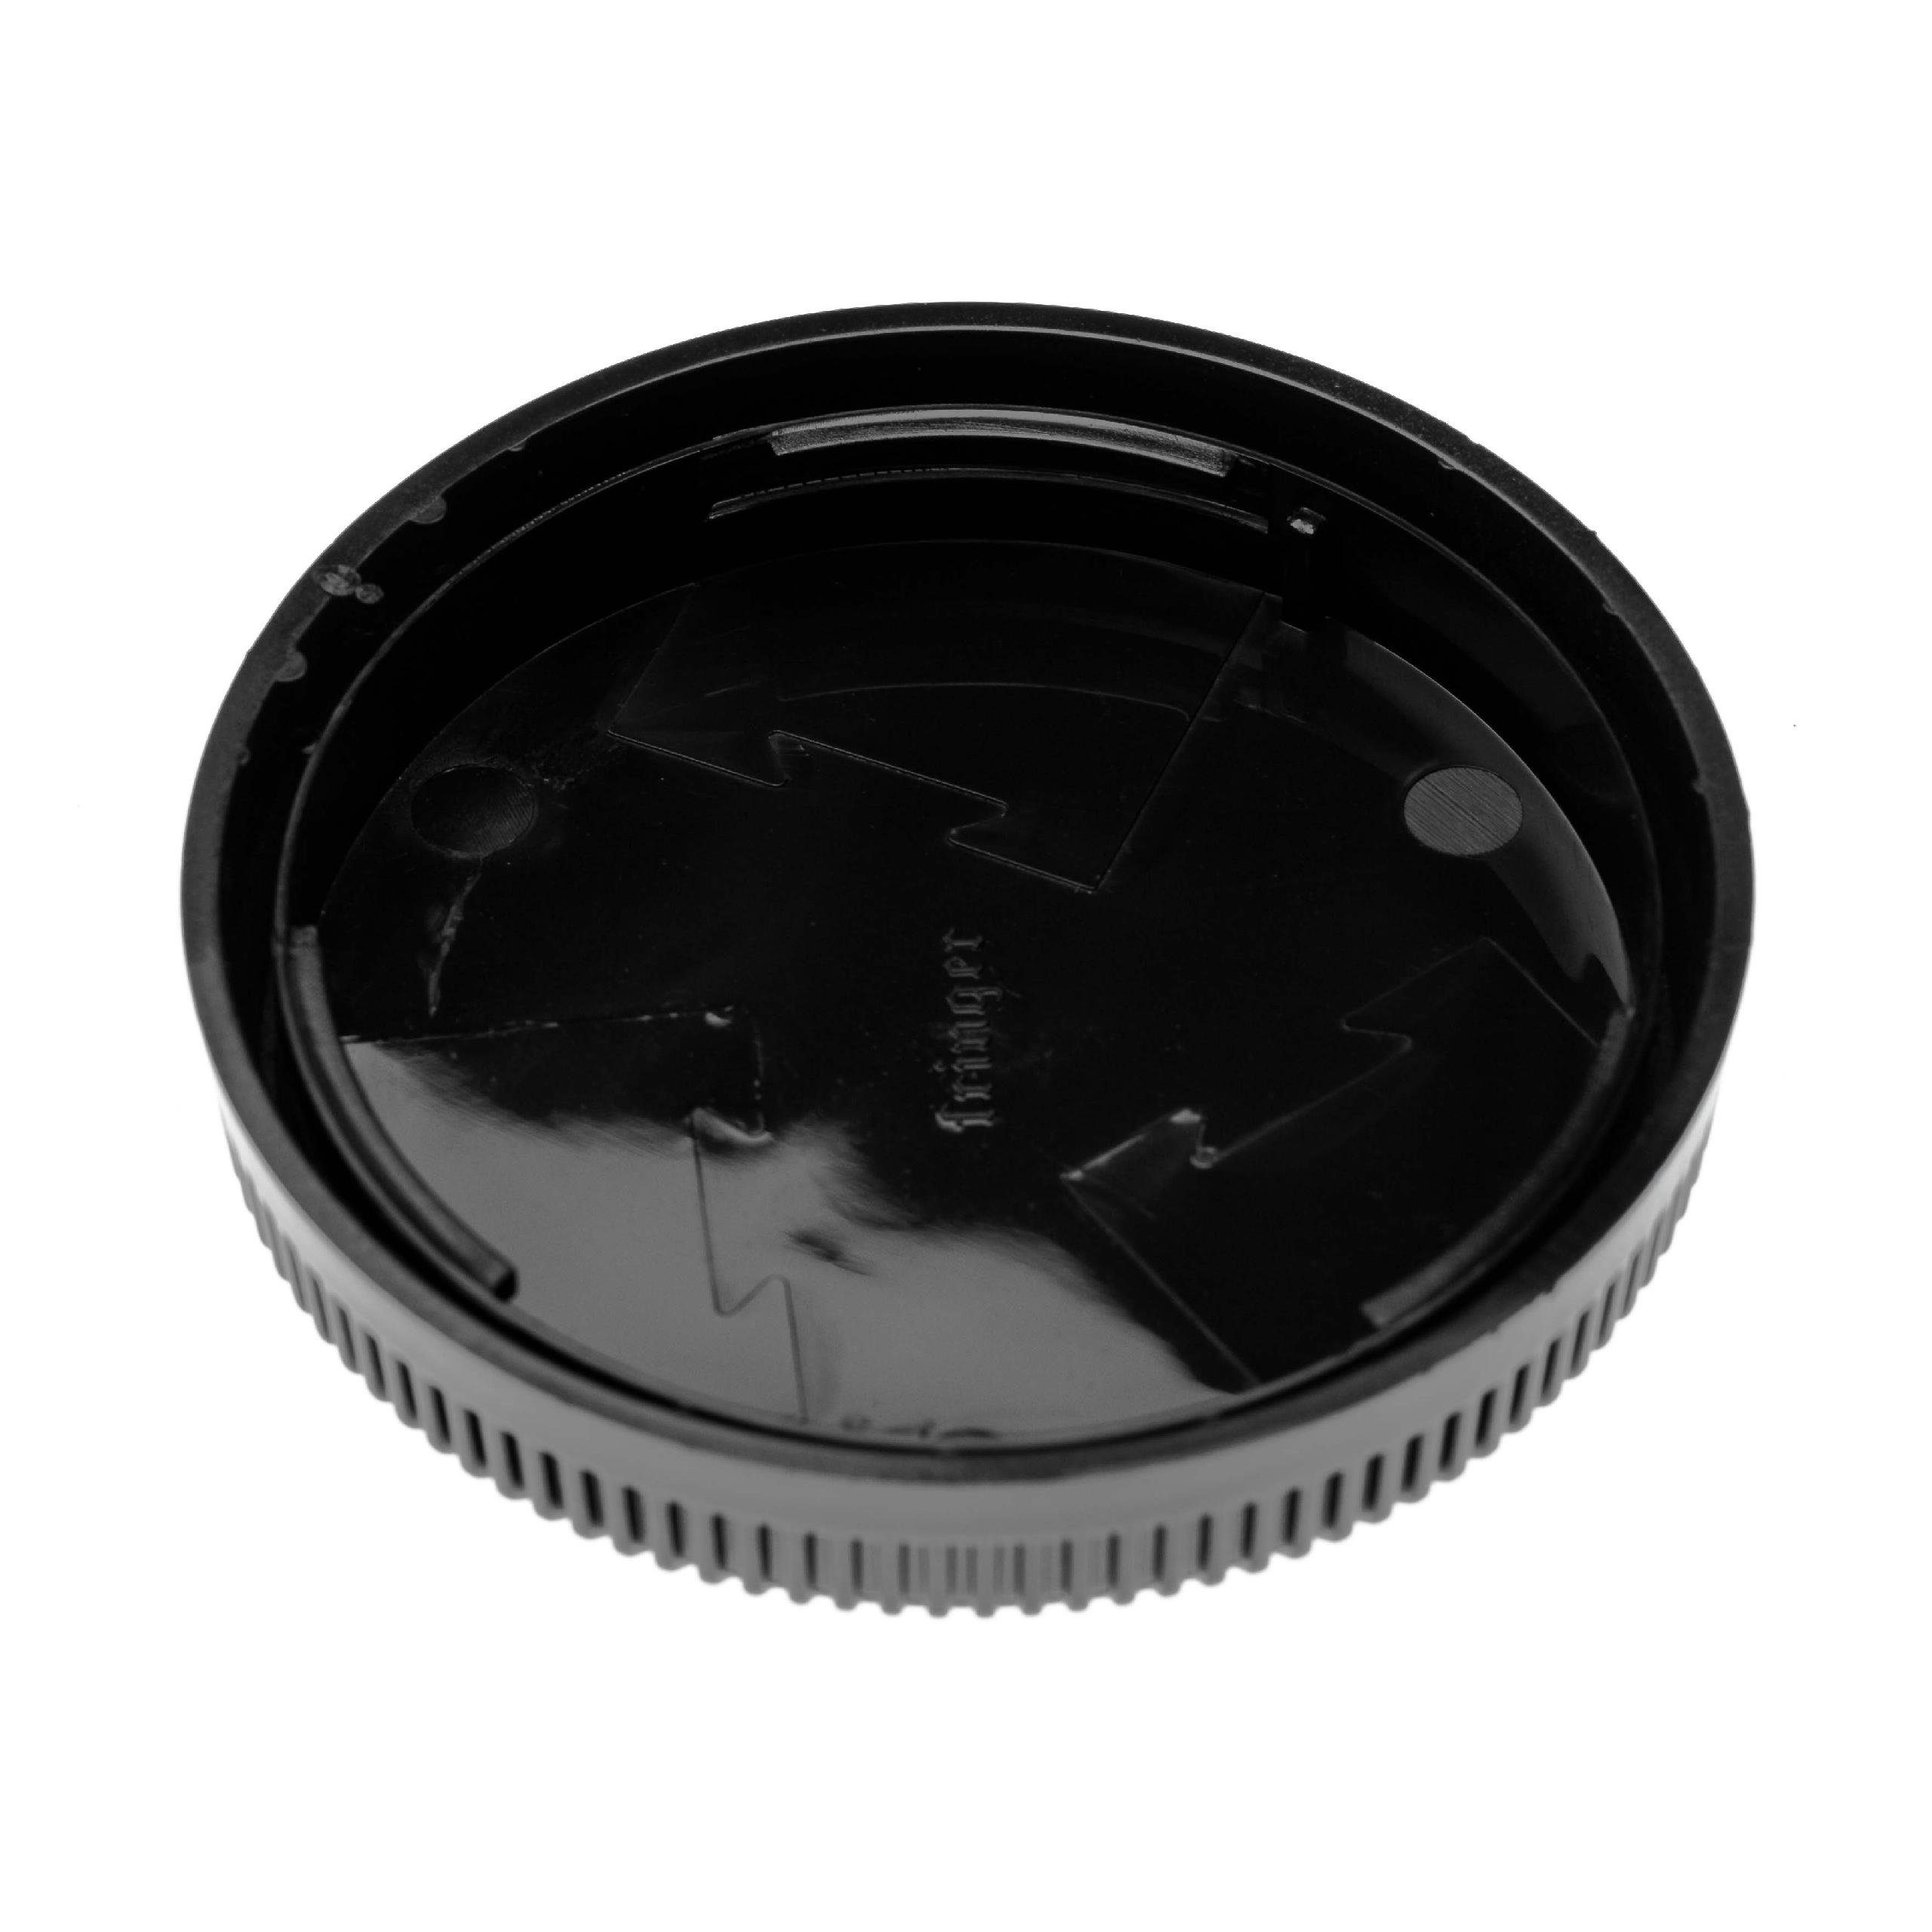 vhbw Objektivrückdeckel passend für Fujifilm GFX-Serie Kamera